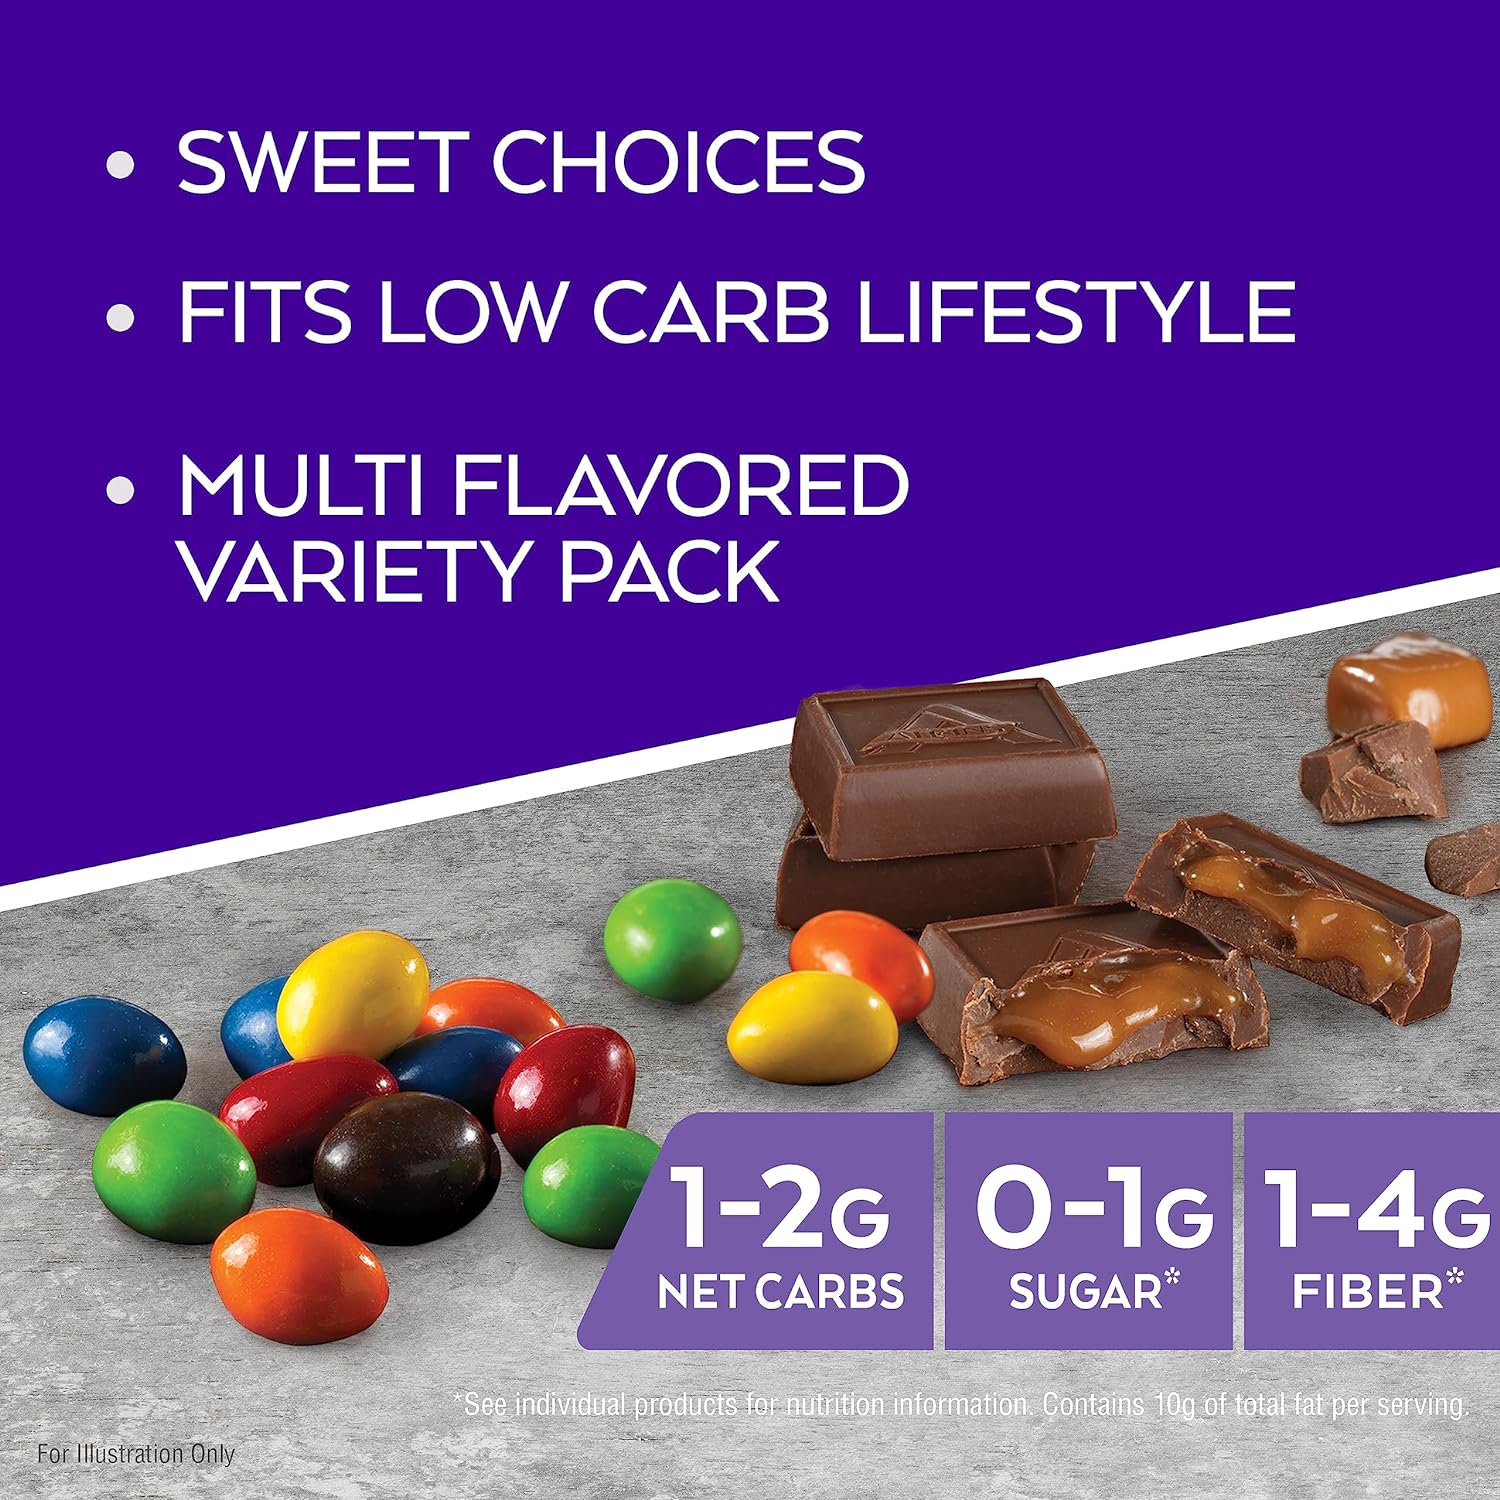 Atkins Endulge Chocolate Peanut Candies, Dessert Favorite, 0g Sugar, 20 Counts : Health & Household